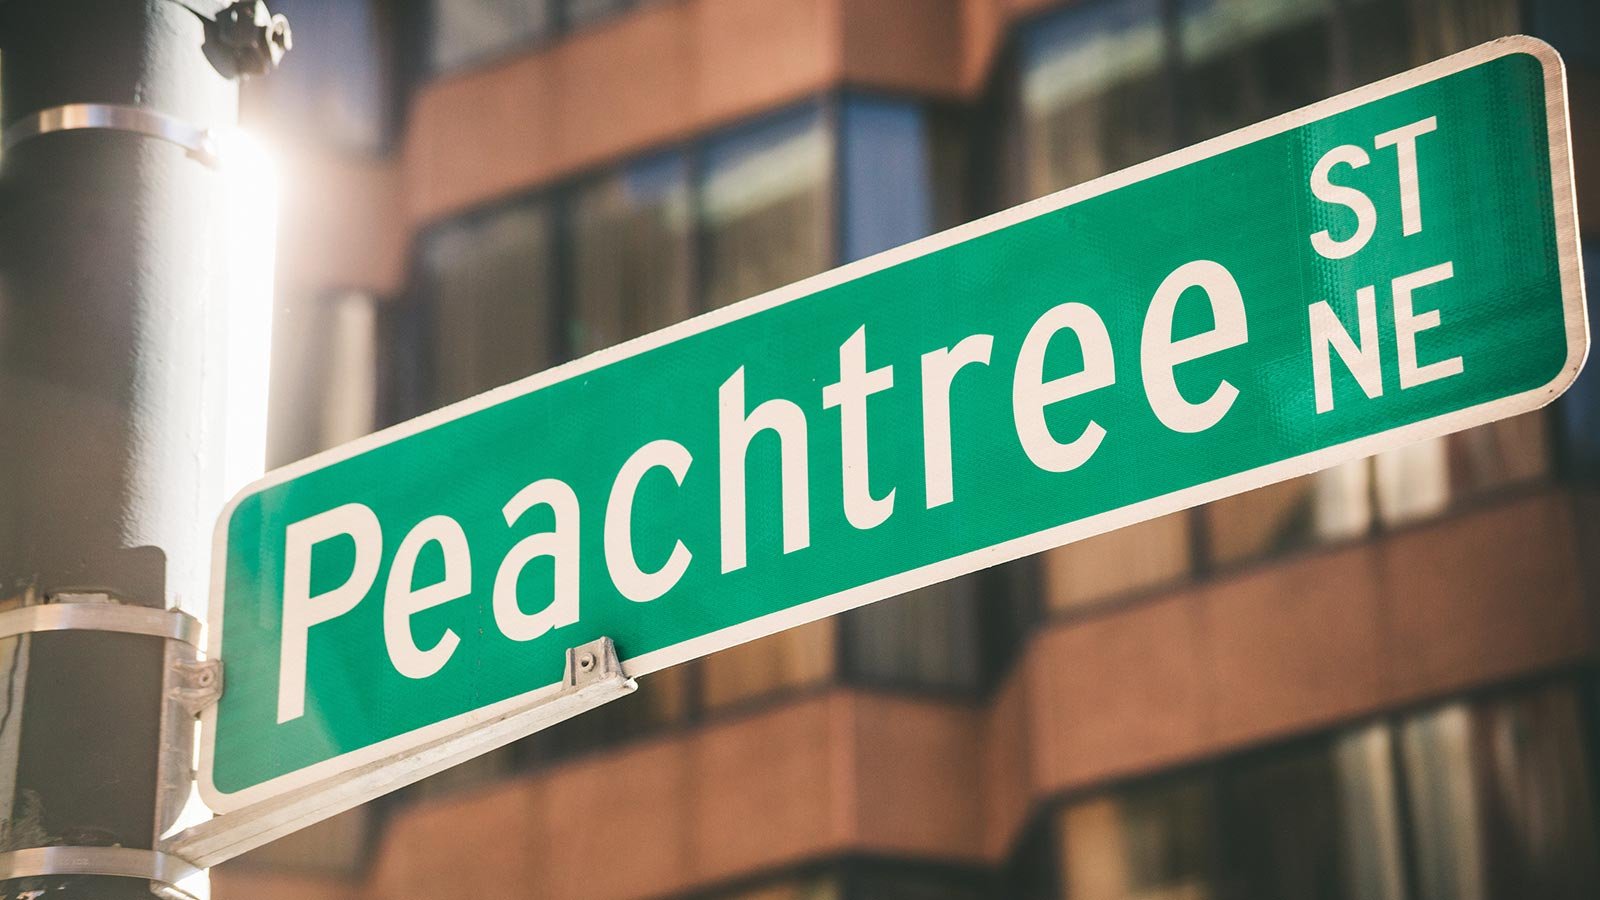 Peachtree Street sign